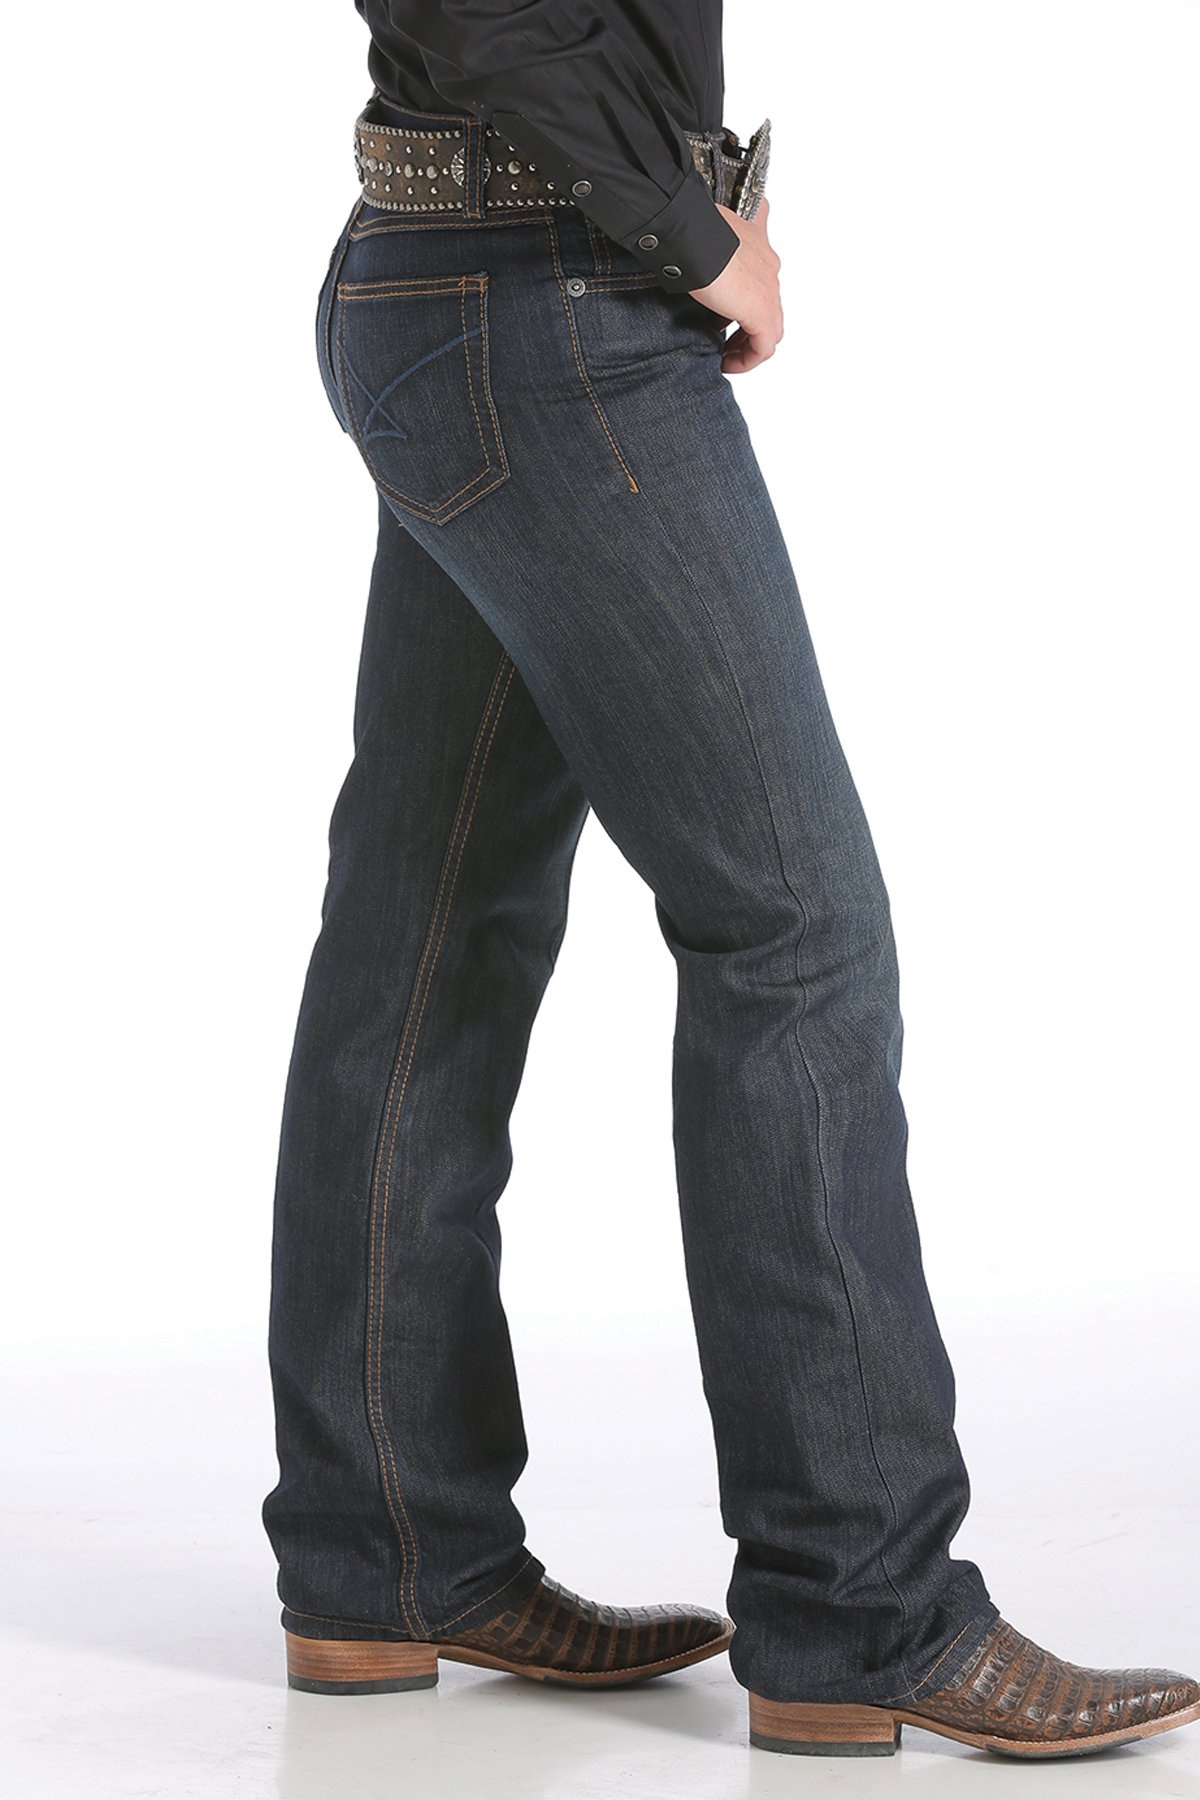 Cinch Women's Jeans 'Jenna' Performance Rise Slim Fit Boot Cut ...